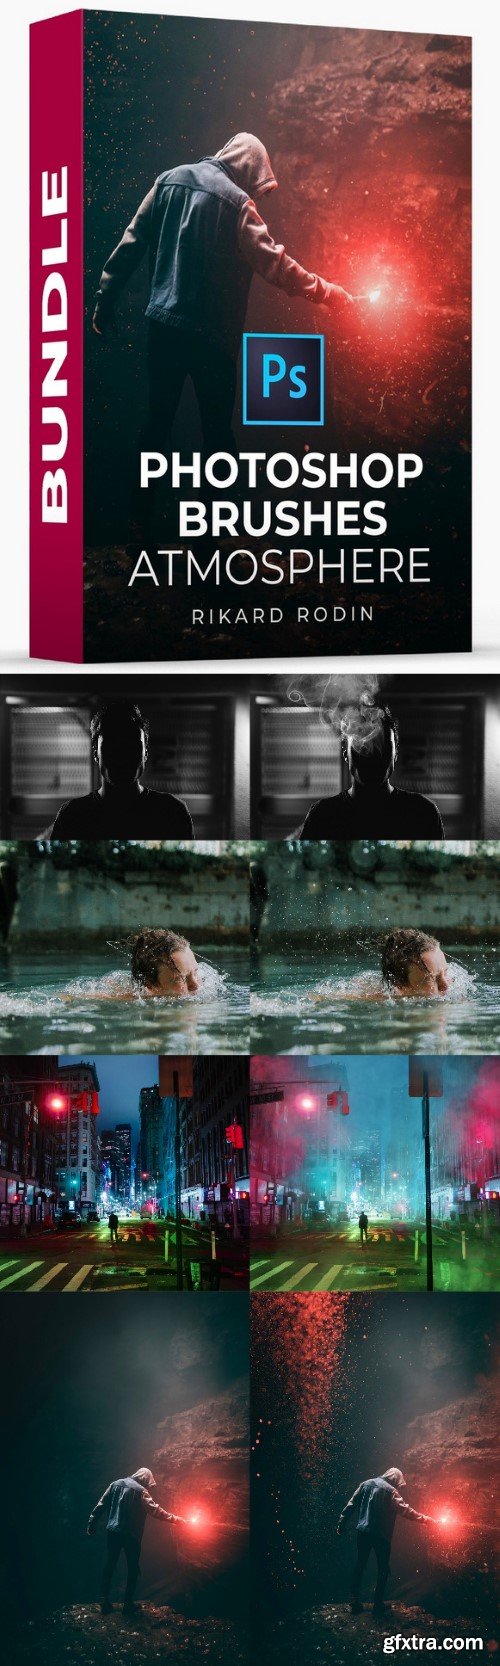 Rikard Rodin - Photoshop Brushes Atmosphere Series